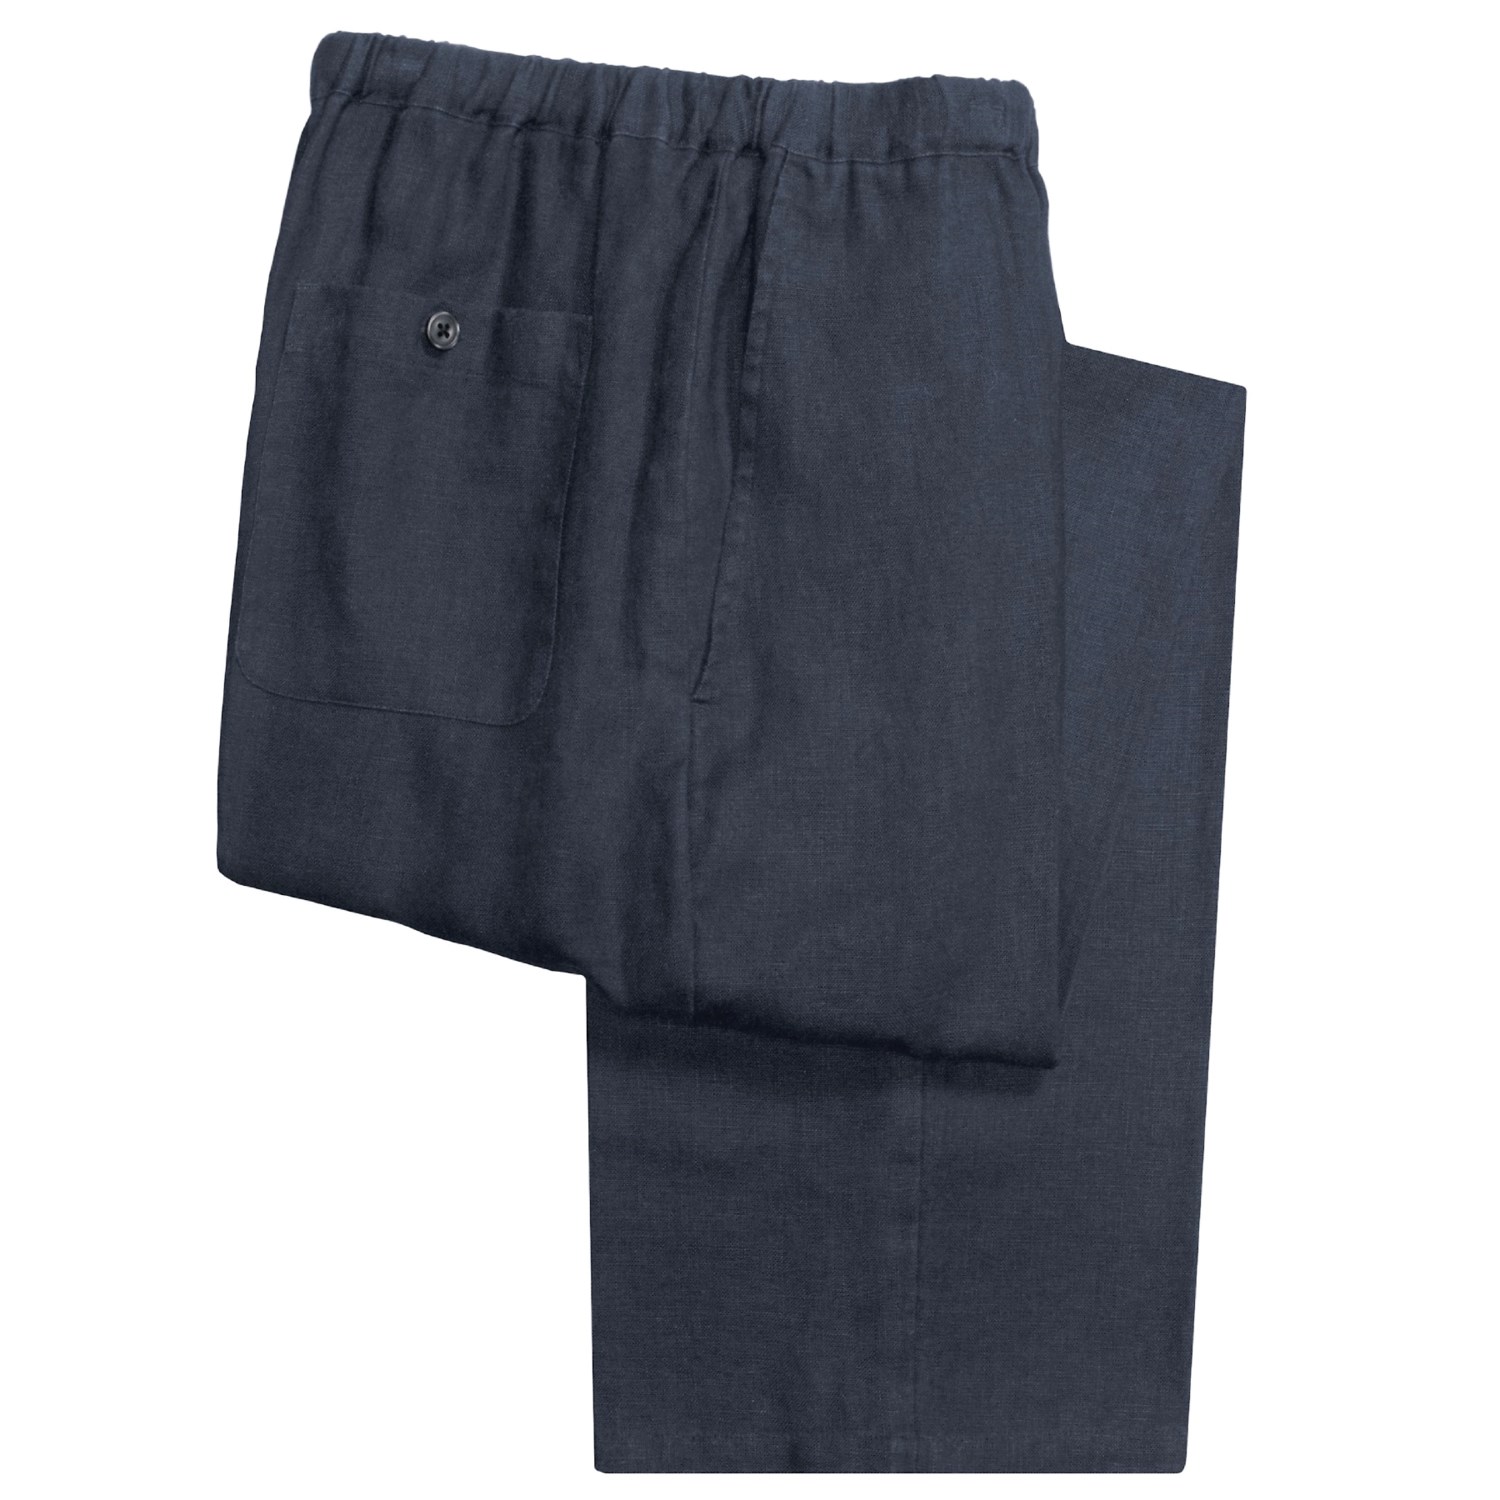 Toscano Linen Drawstring Pants (For Men) 19693 - Save 74%